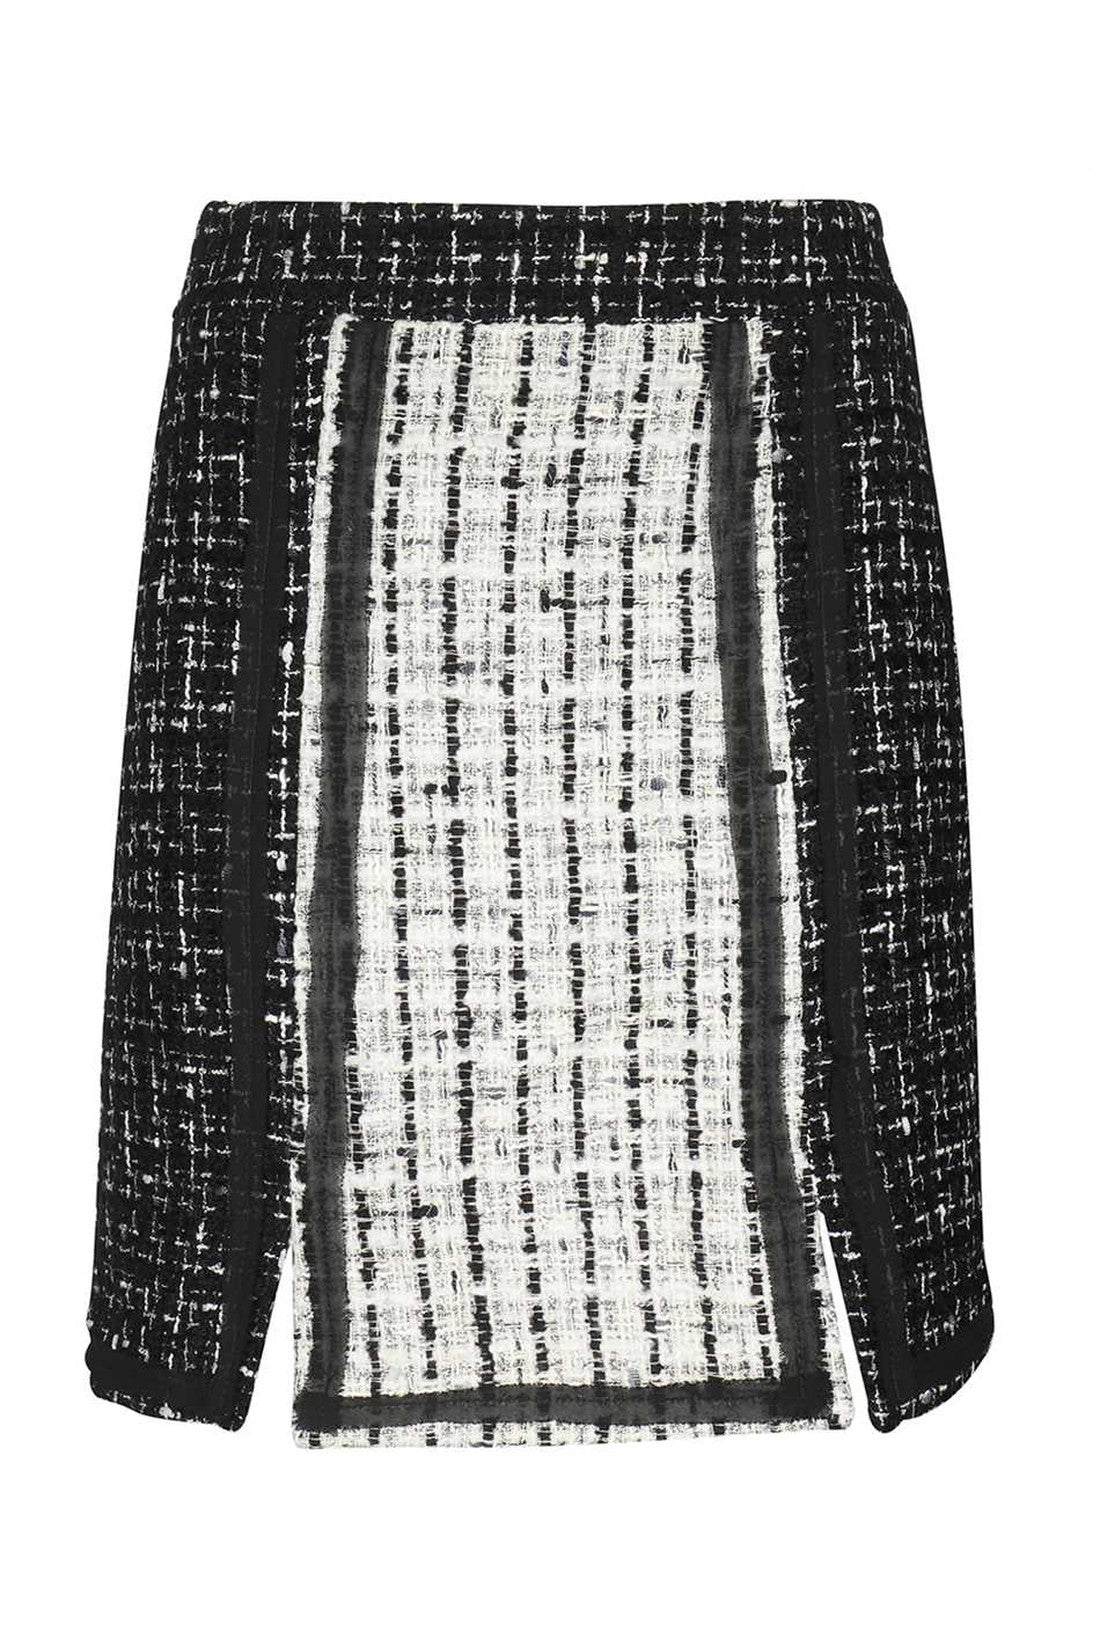 Bouclé wool skirt-Karl Lagerfeld-OUTLET-SALE-38-ARCHIVIST